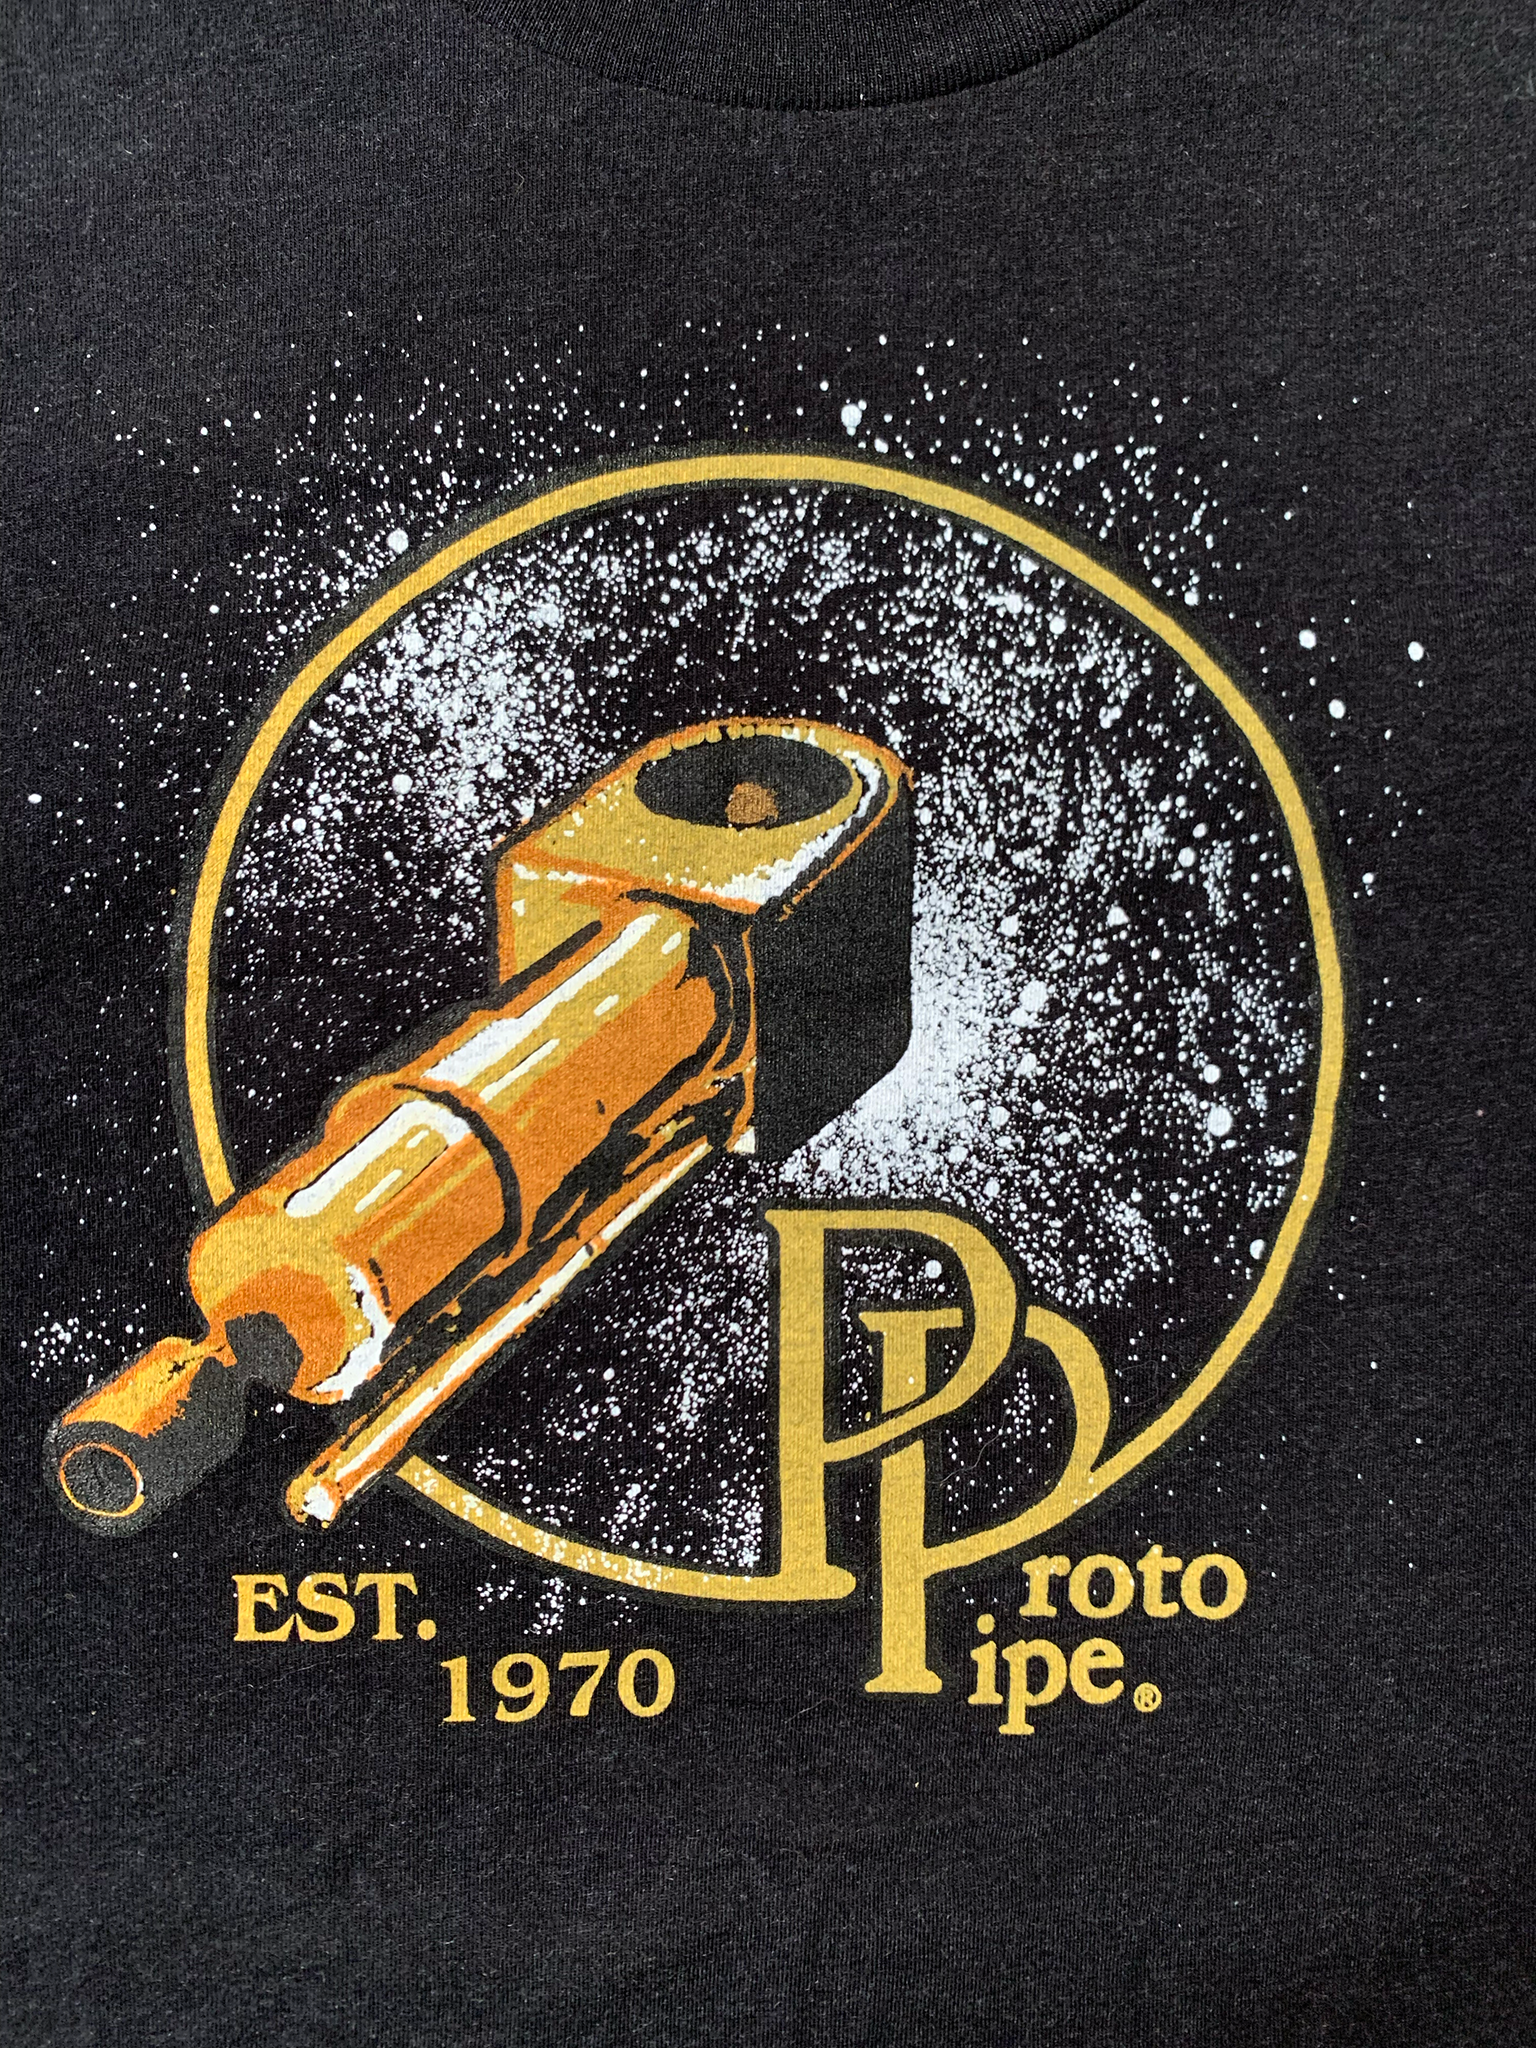 Proto Pipe LLC